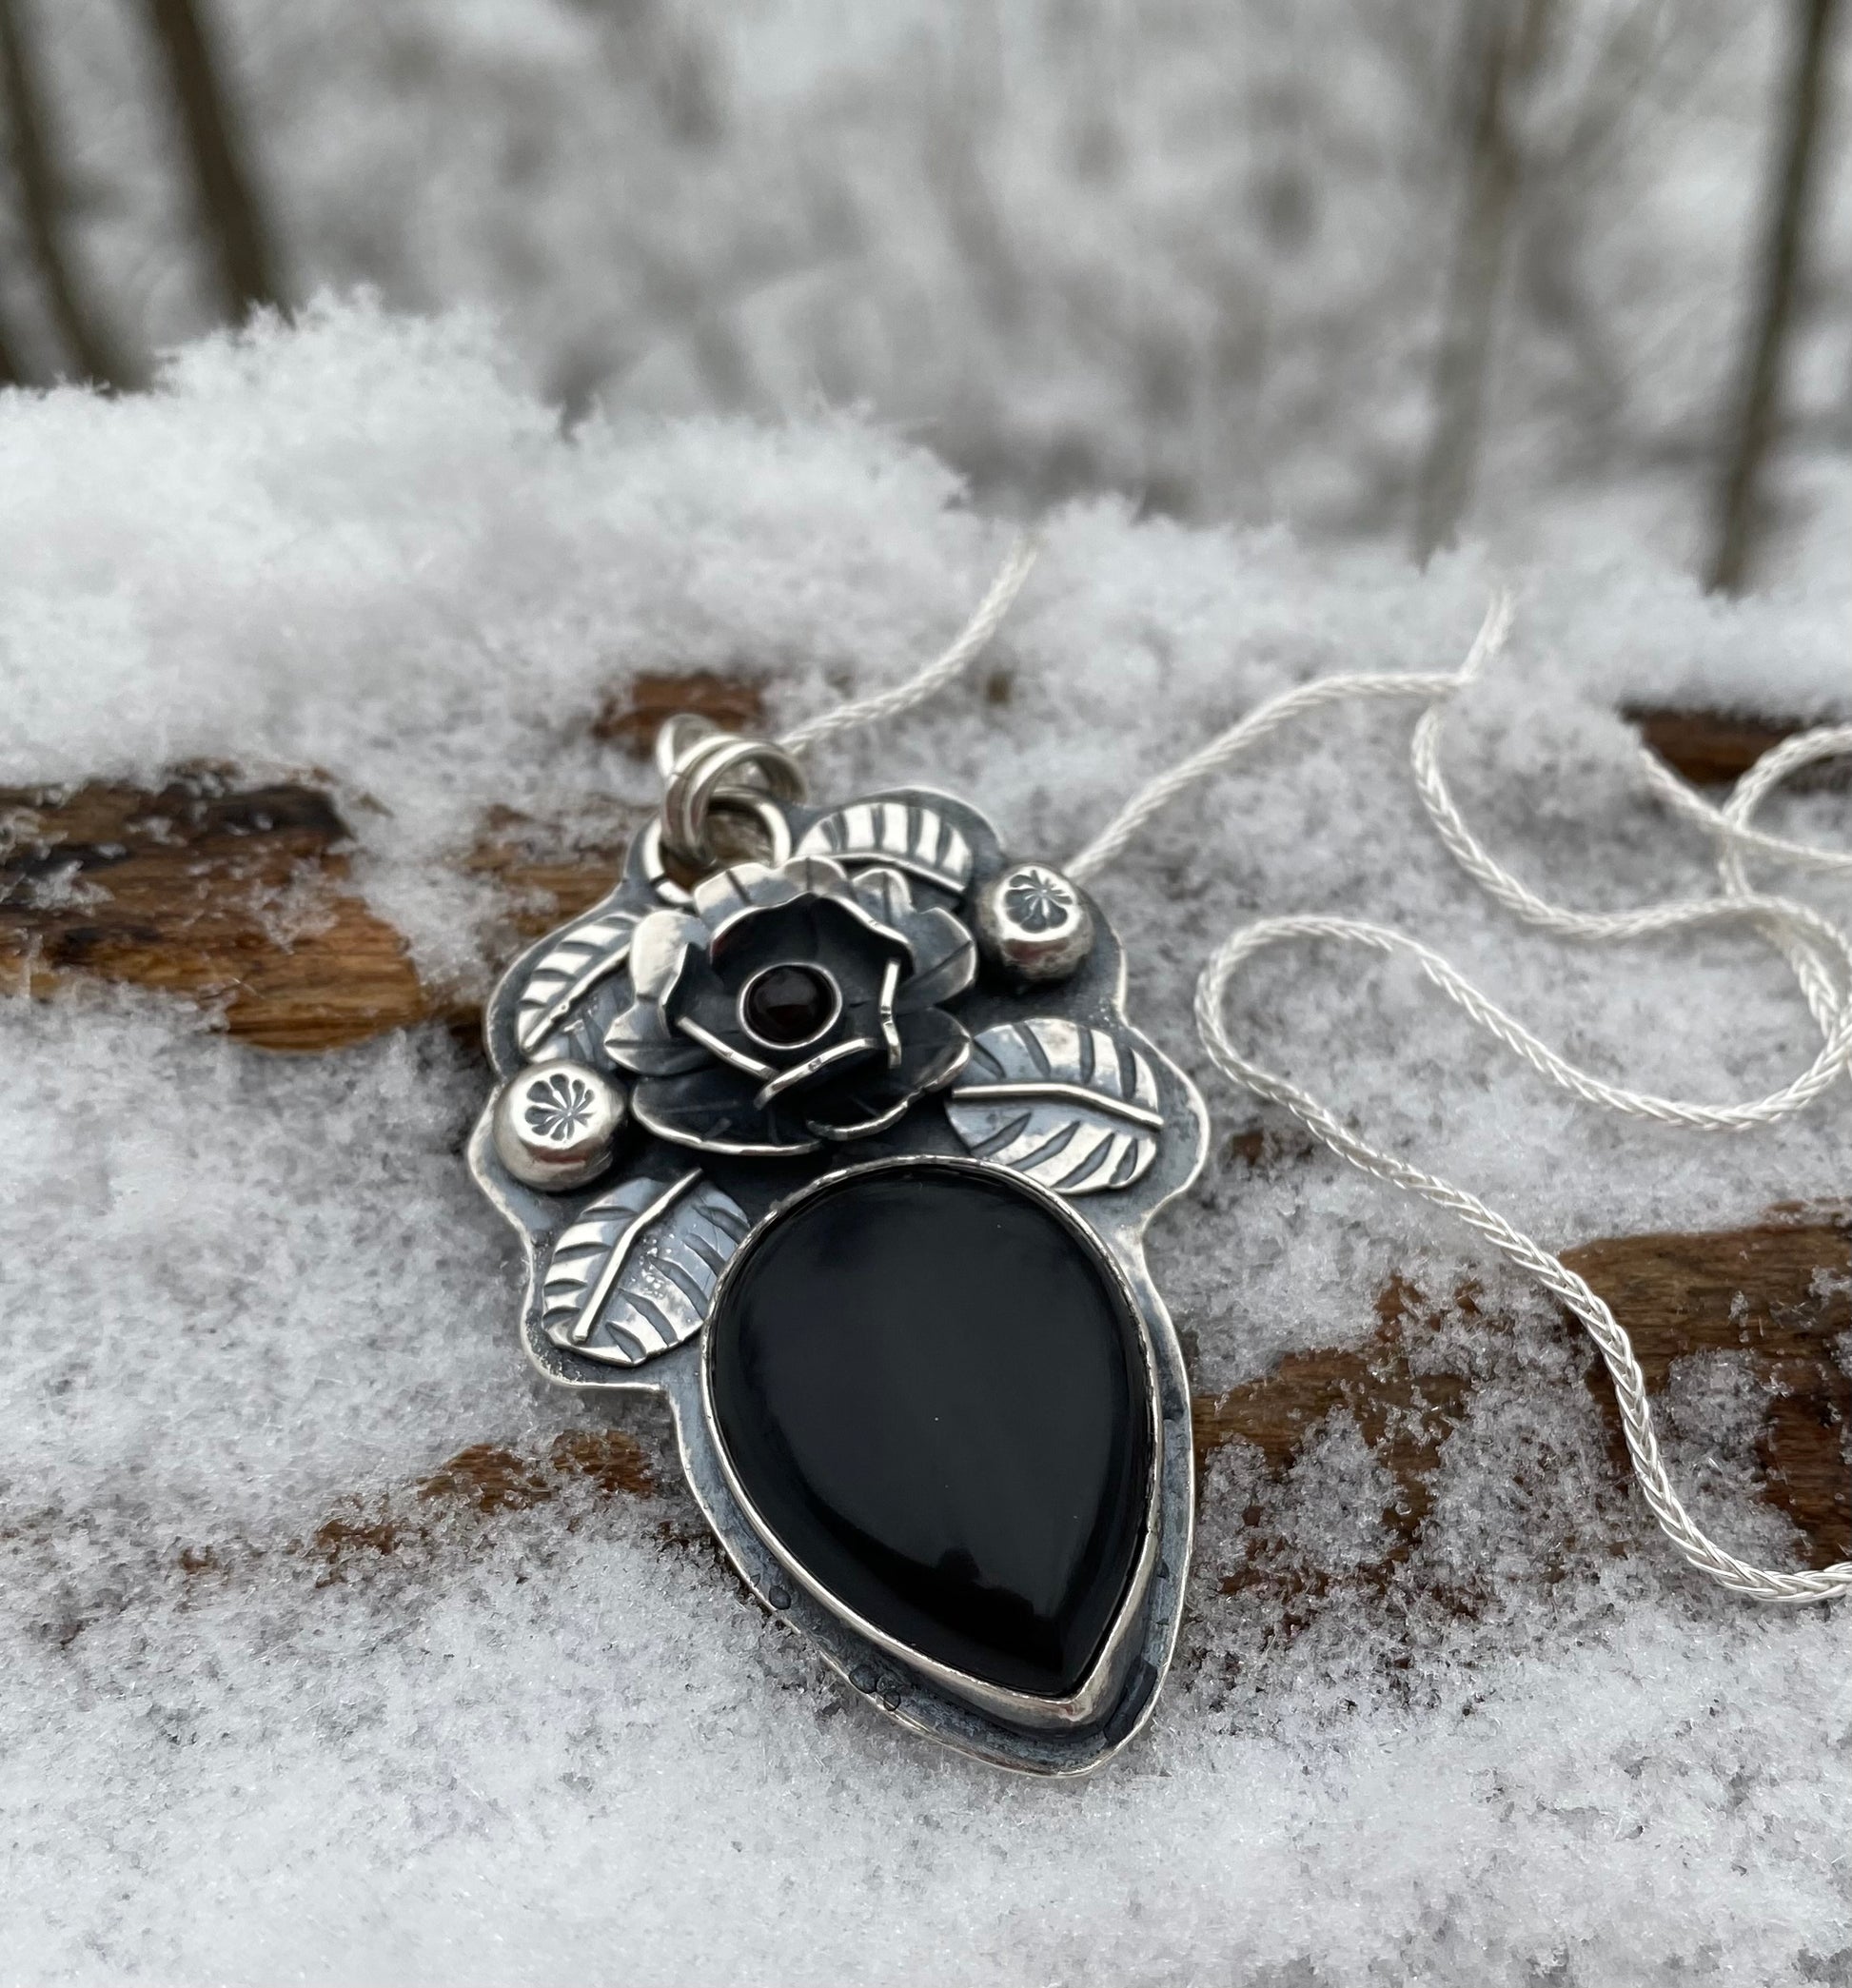 Black Dahlia winter necklace - collectionsbytracy.com